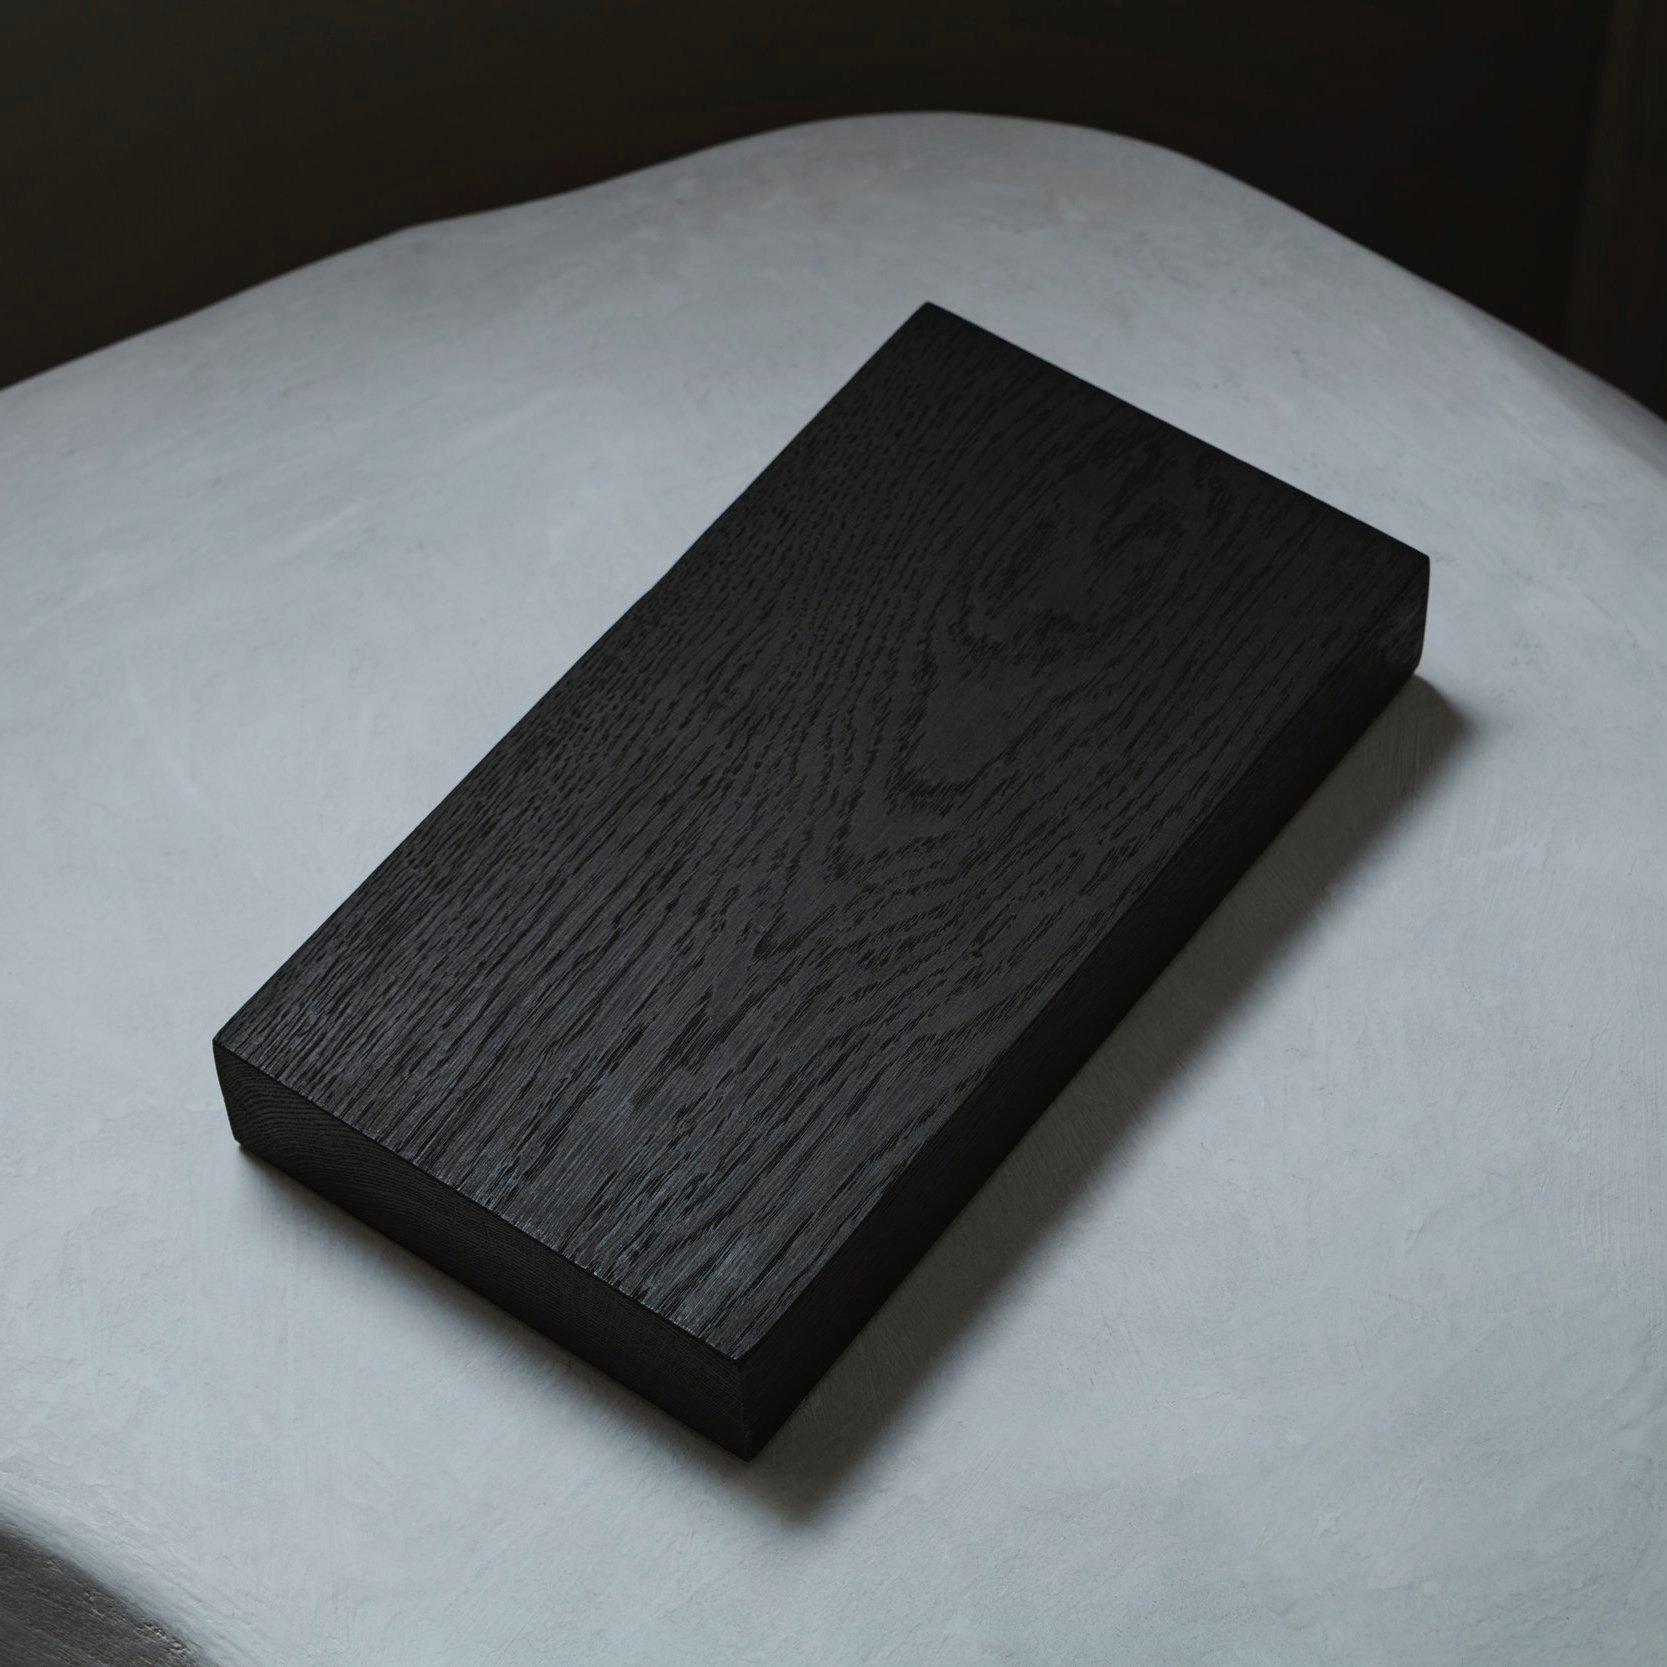 Woodwork Modern Sculptural Solid Wooden Cadence Dining Table - Natural Light Oak For Sale